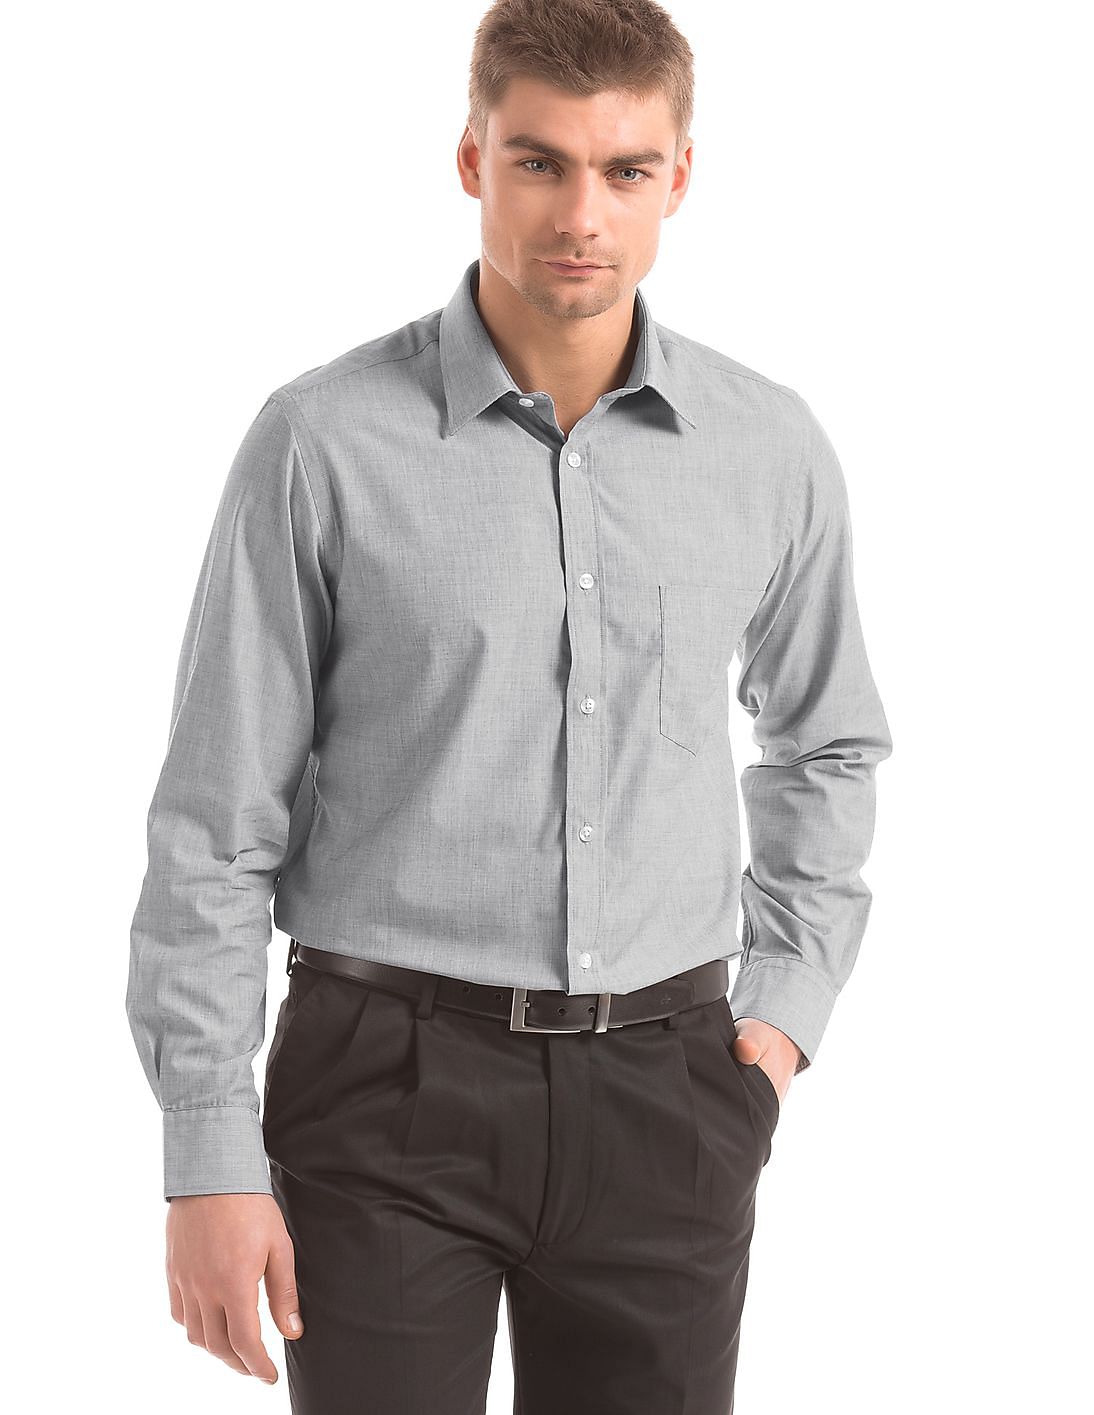 gray formal shirt,Cheap,Sell,OFF 75%,www.araldicavini.it